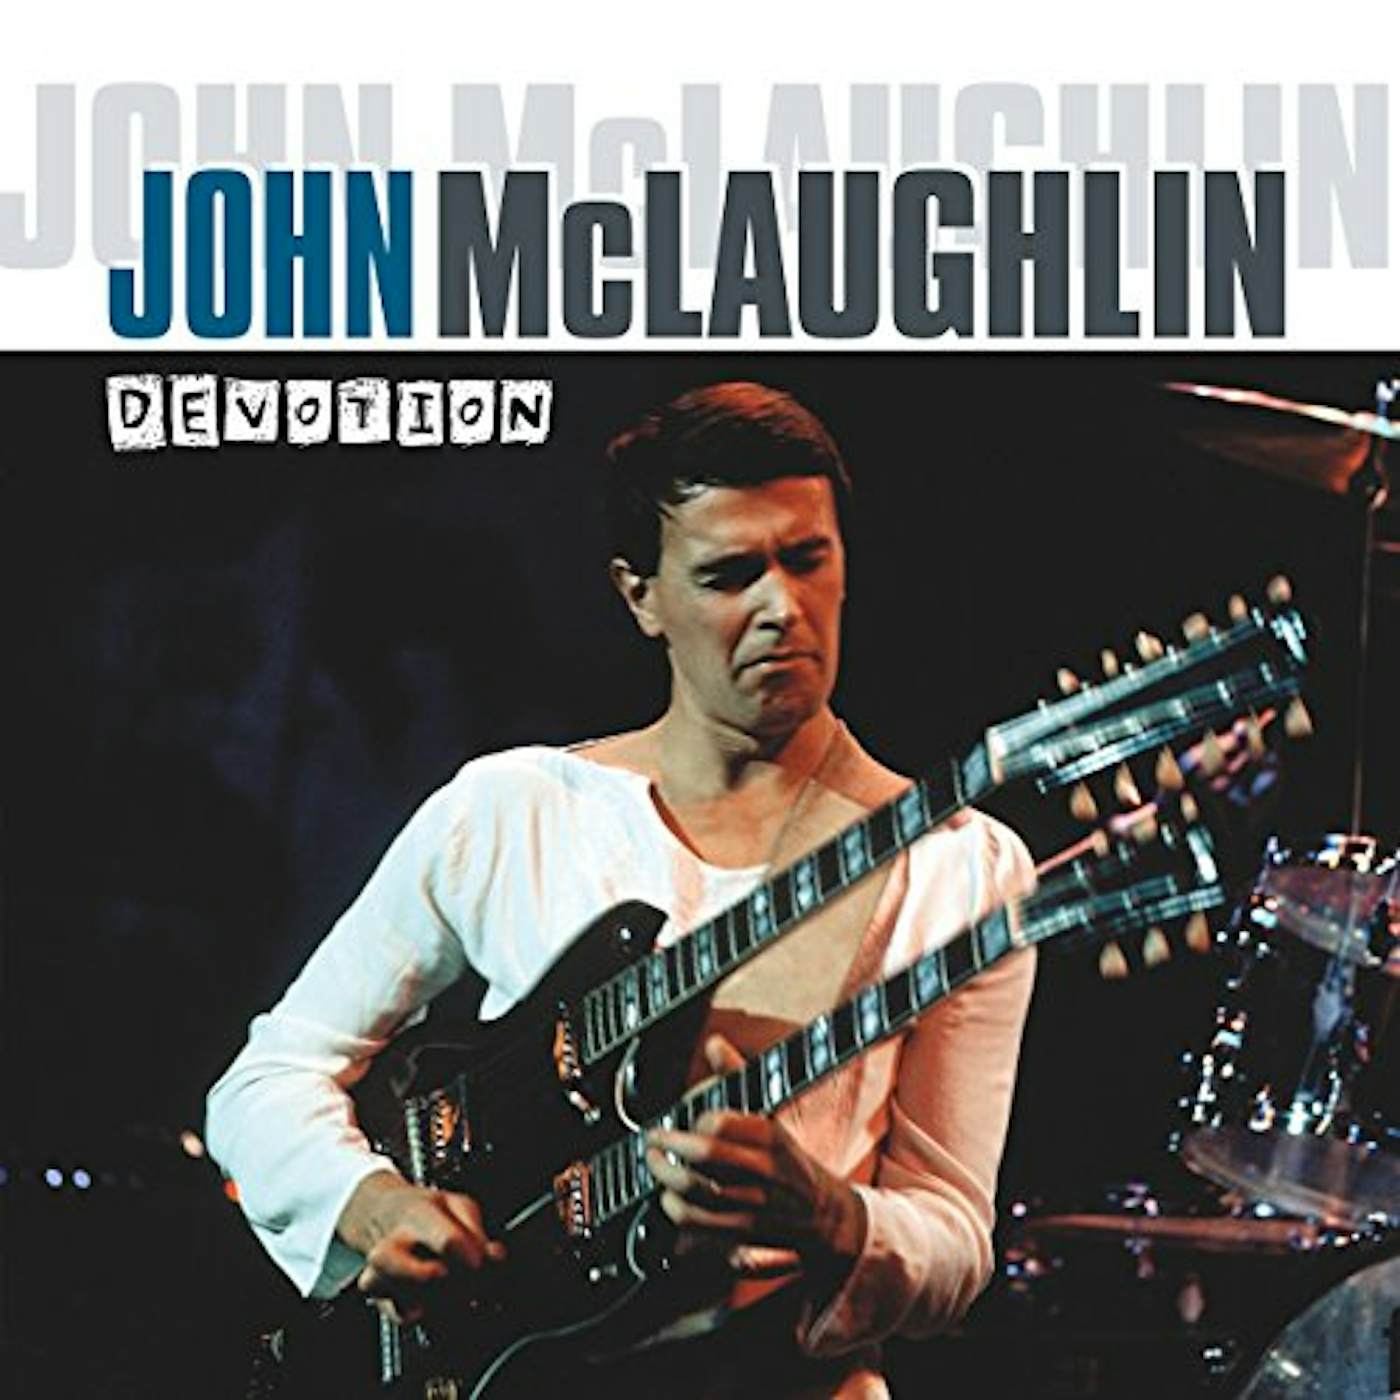 John McLaughlin Devotion Vinyl Record